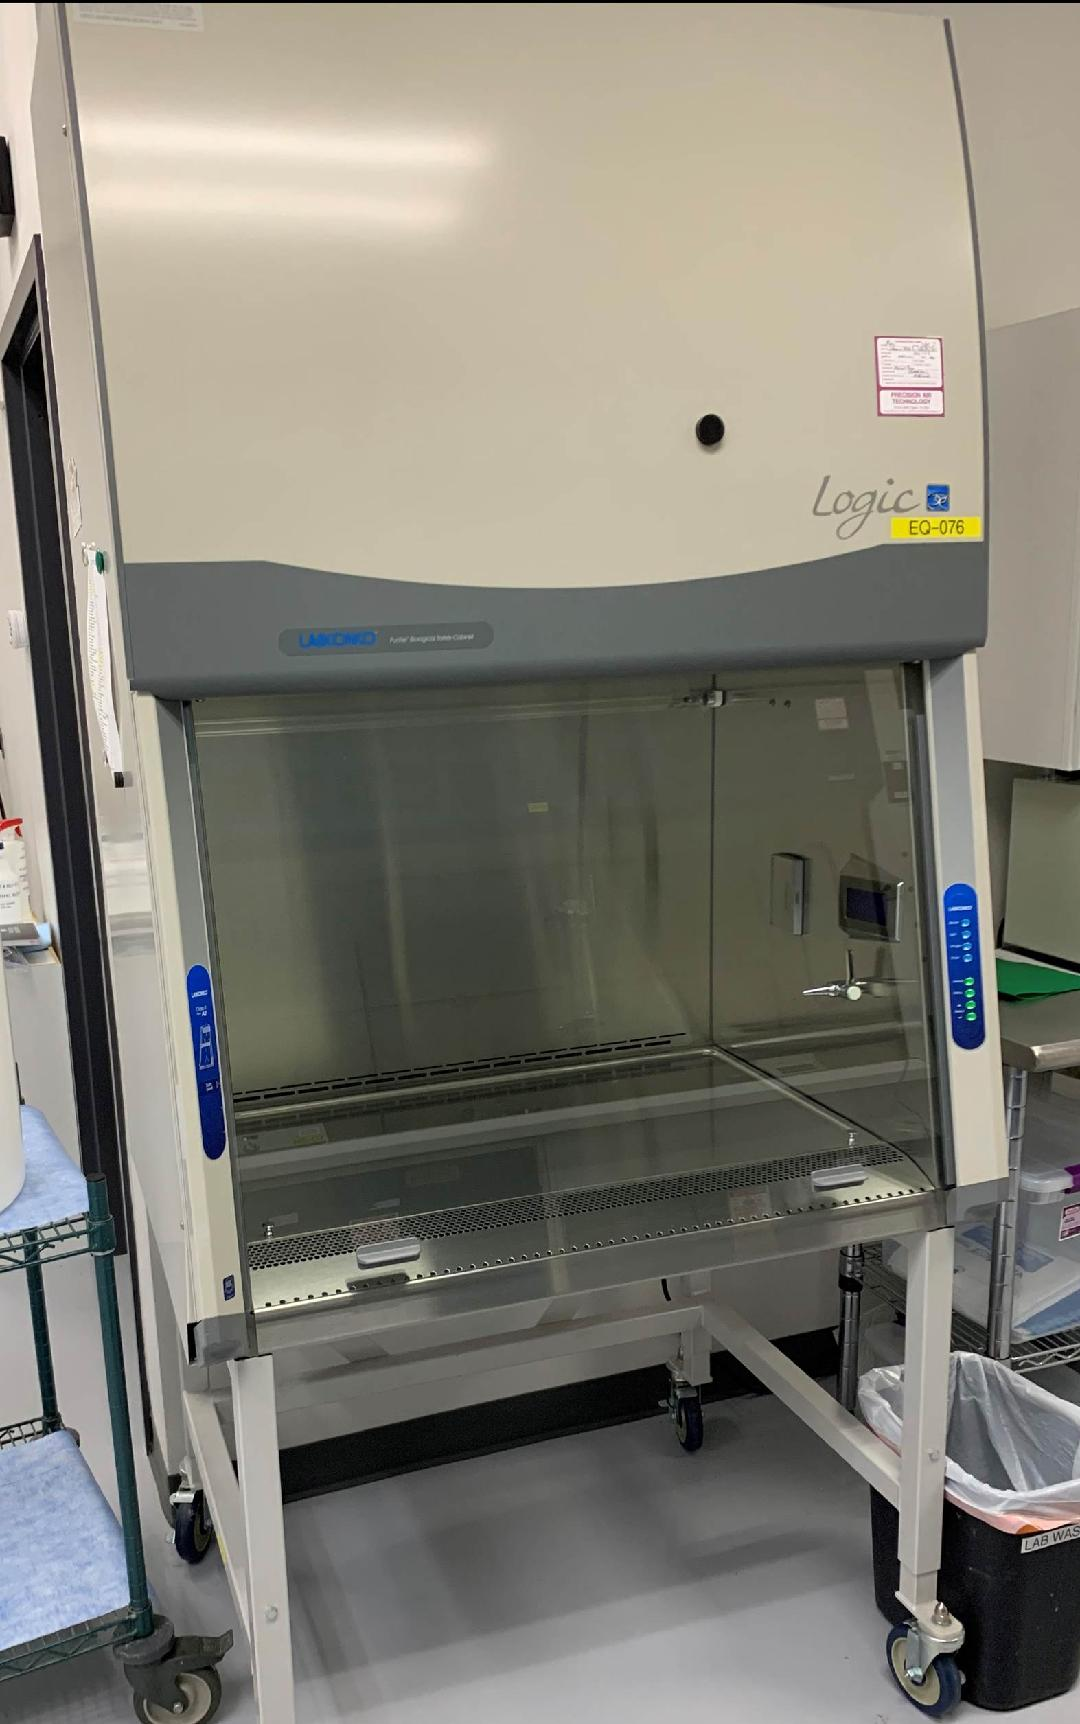 Labconco Logic 3ft Biosafety cabinet - Still in lab